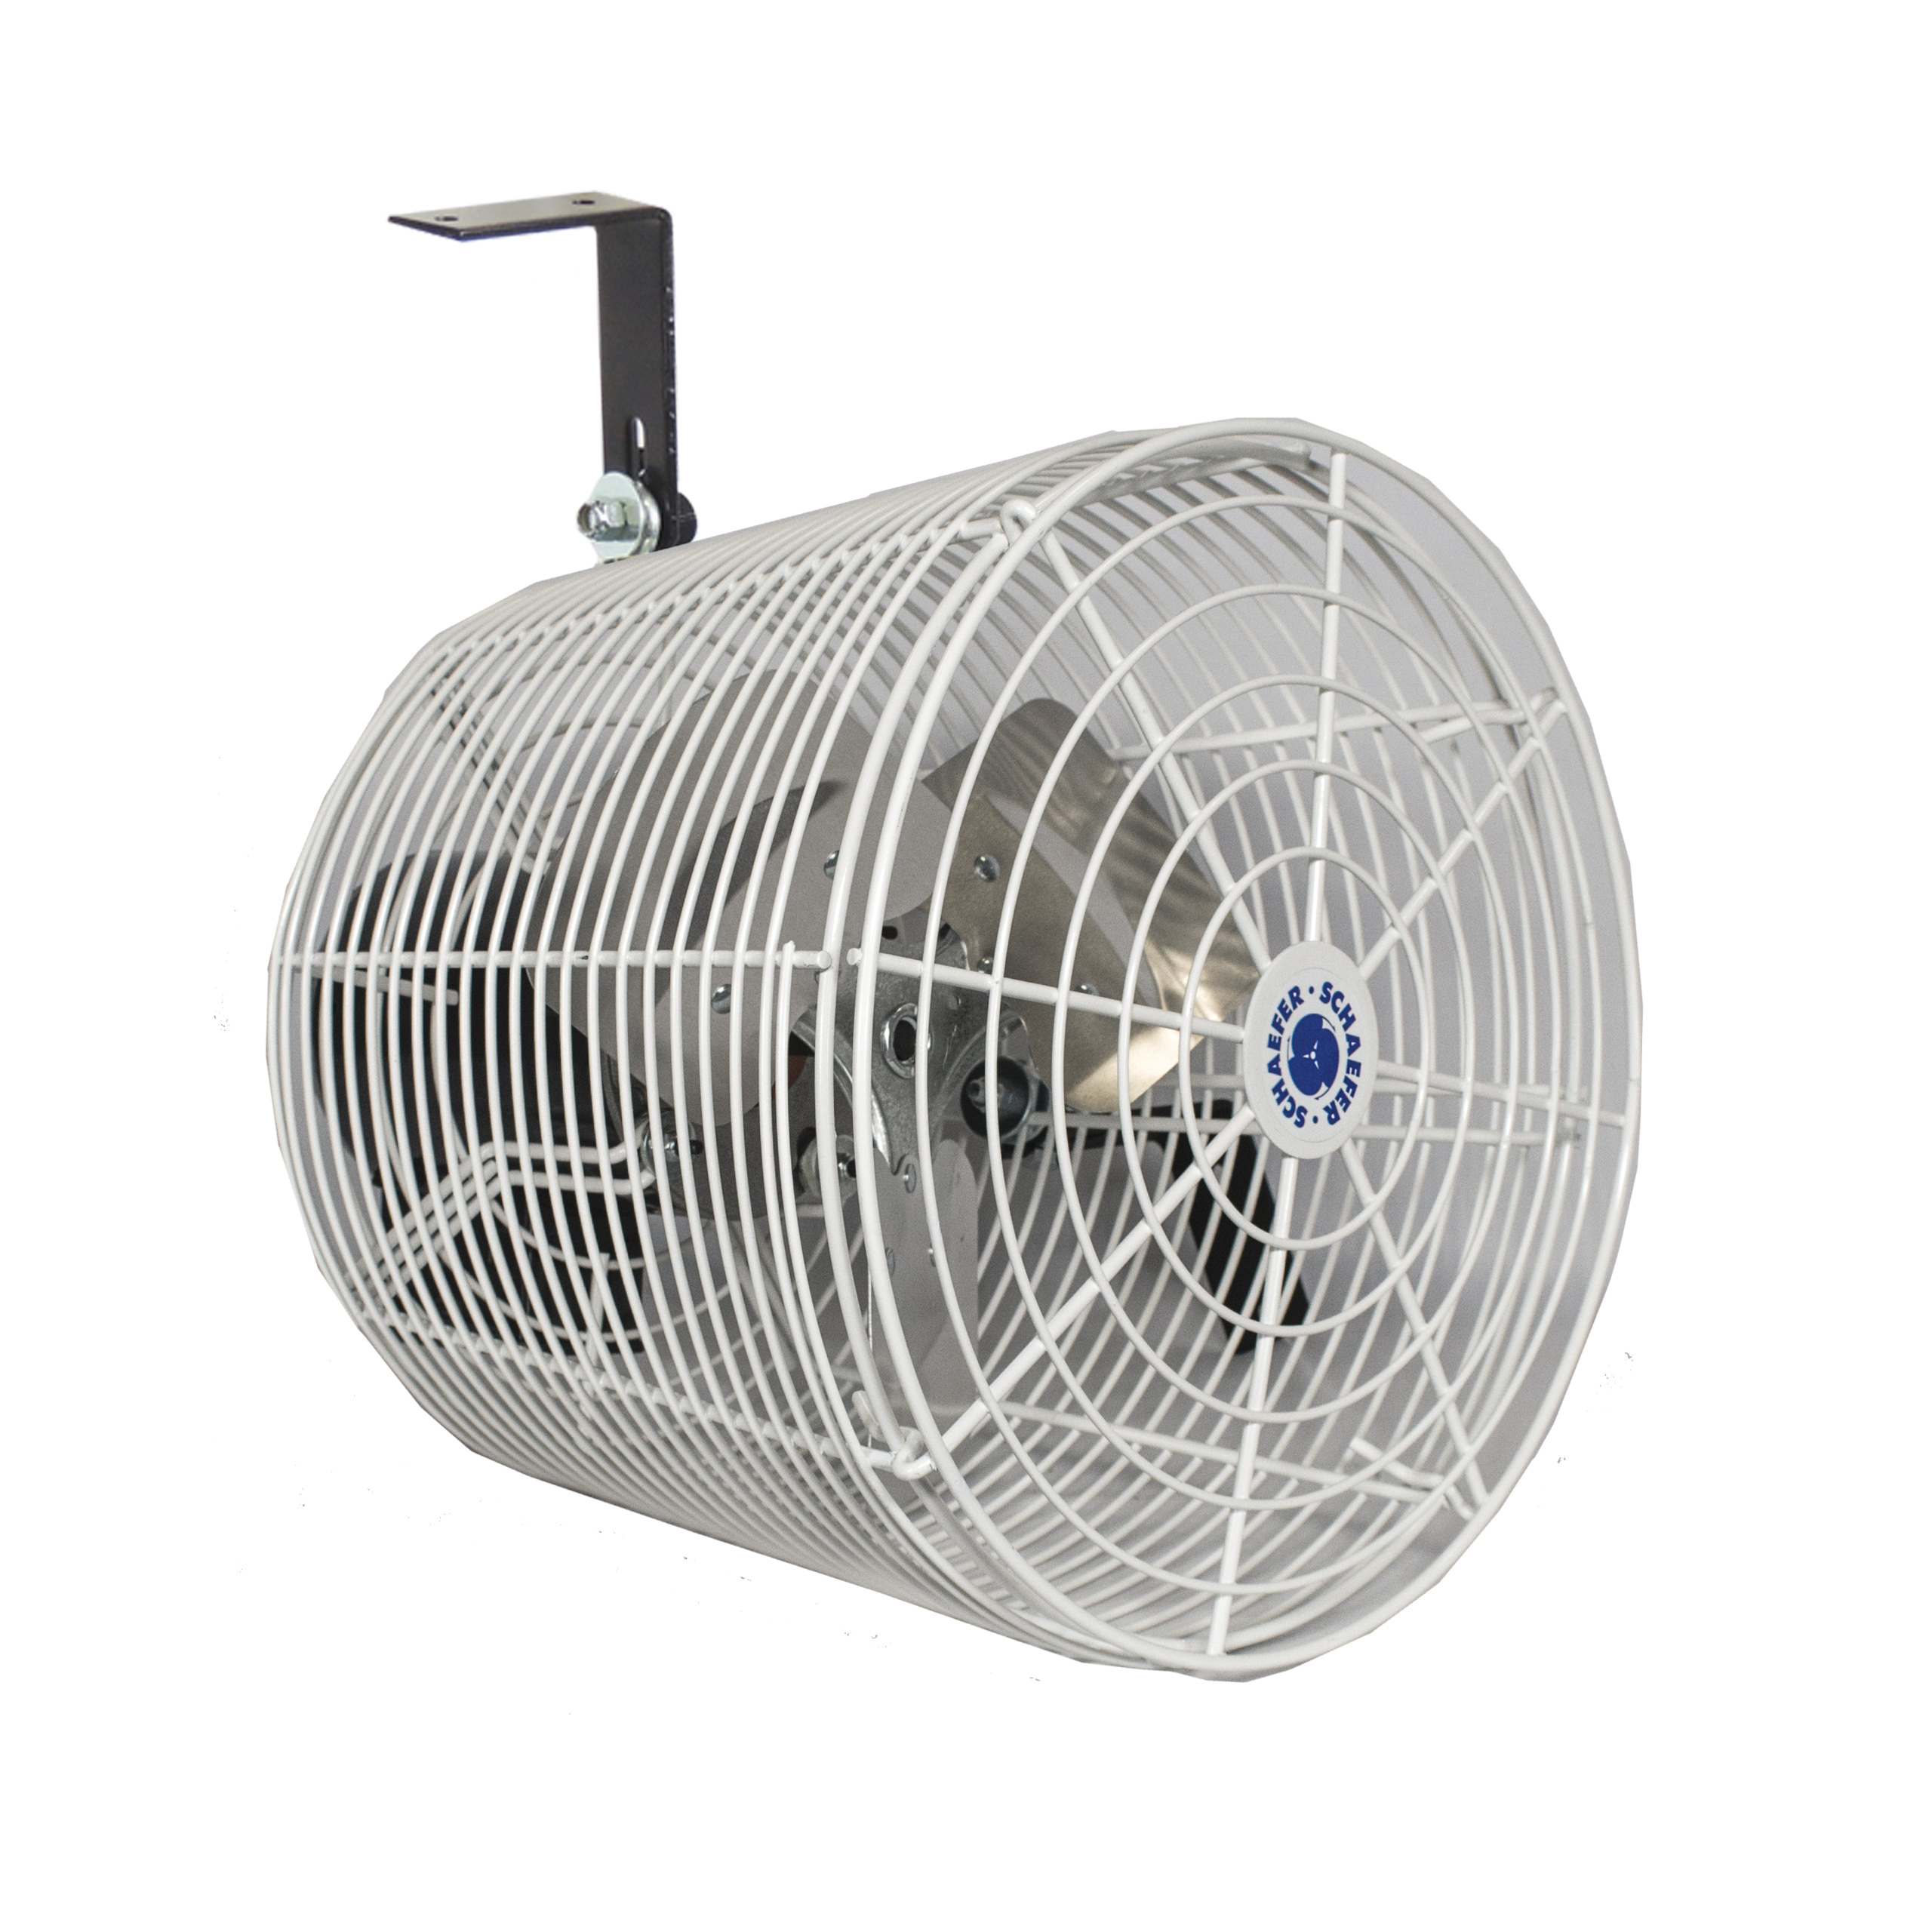 12 F5 Industrial Portable Exhaust Ventilation Blower Axial Fan 